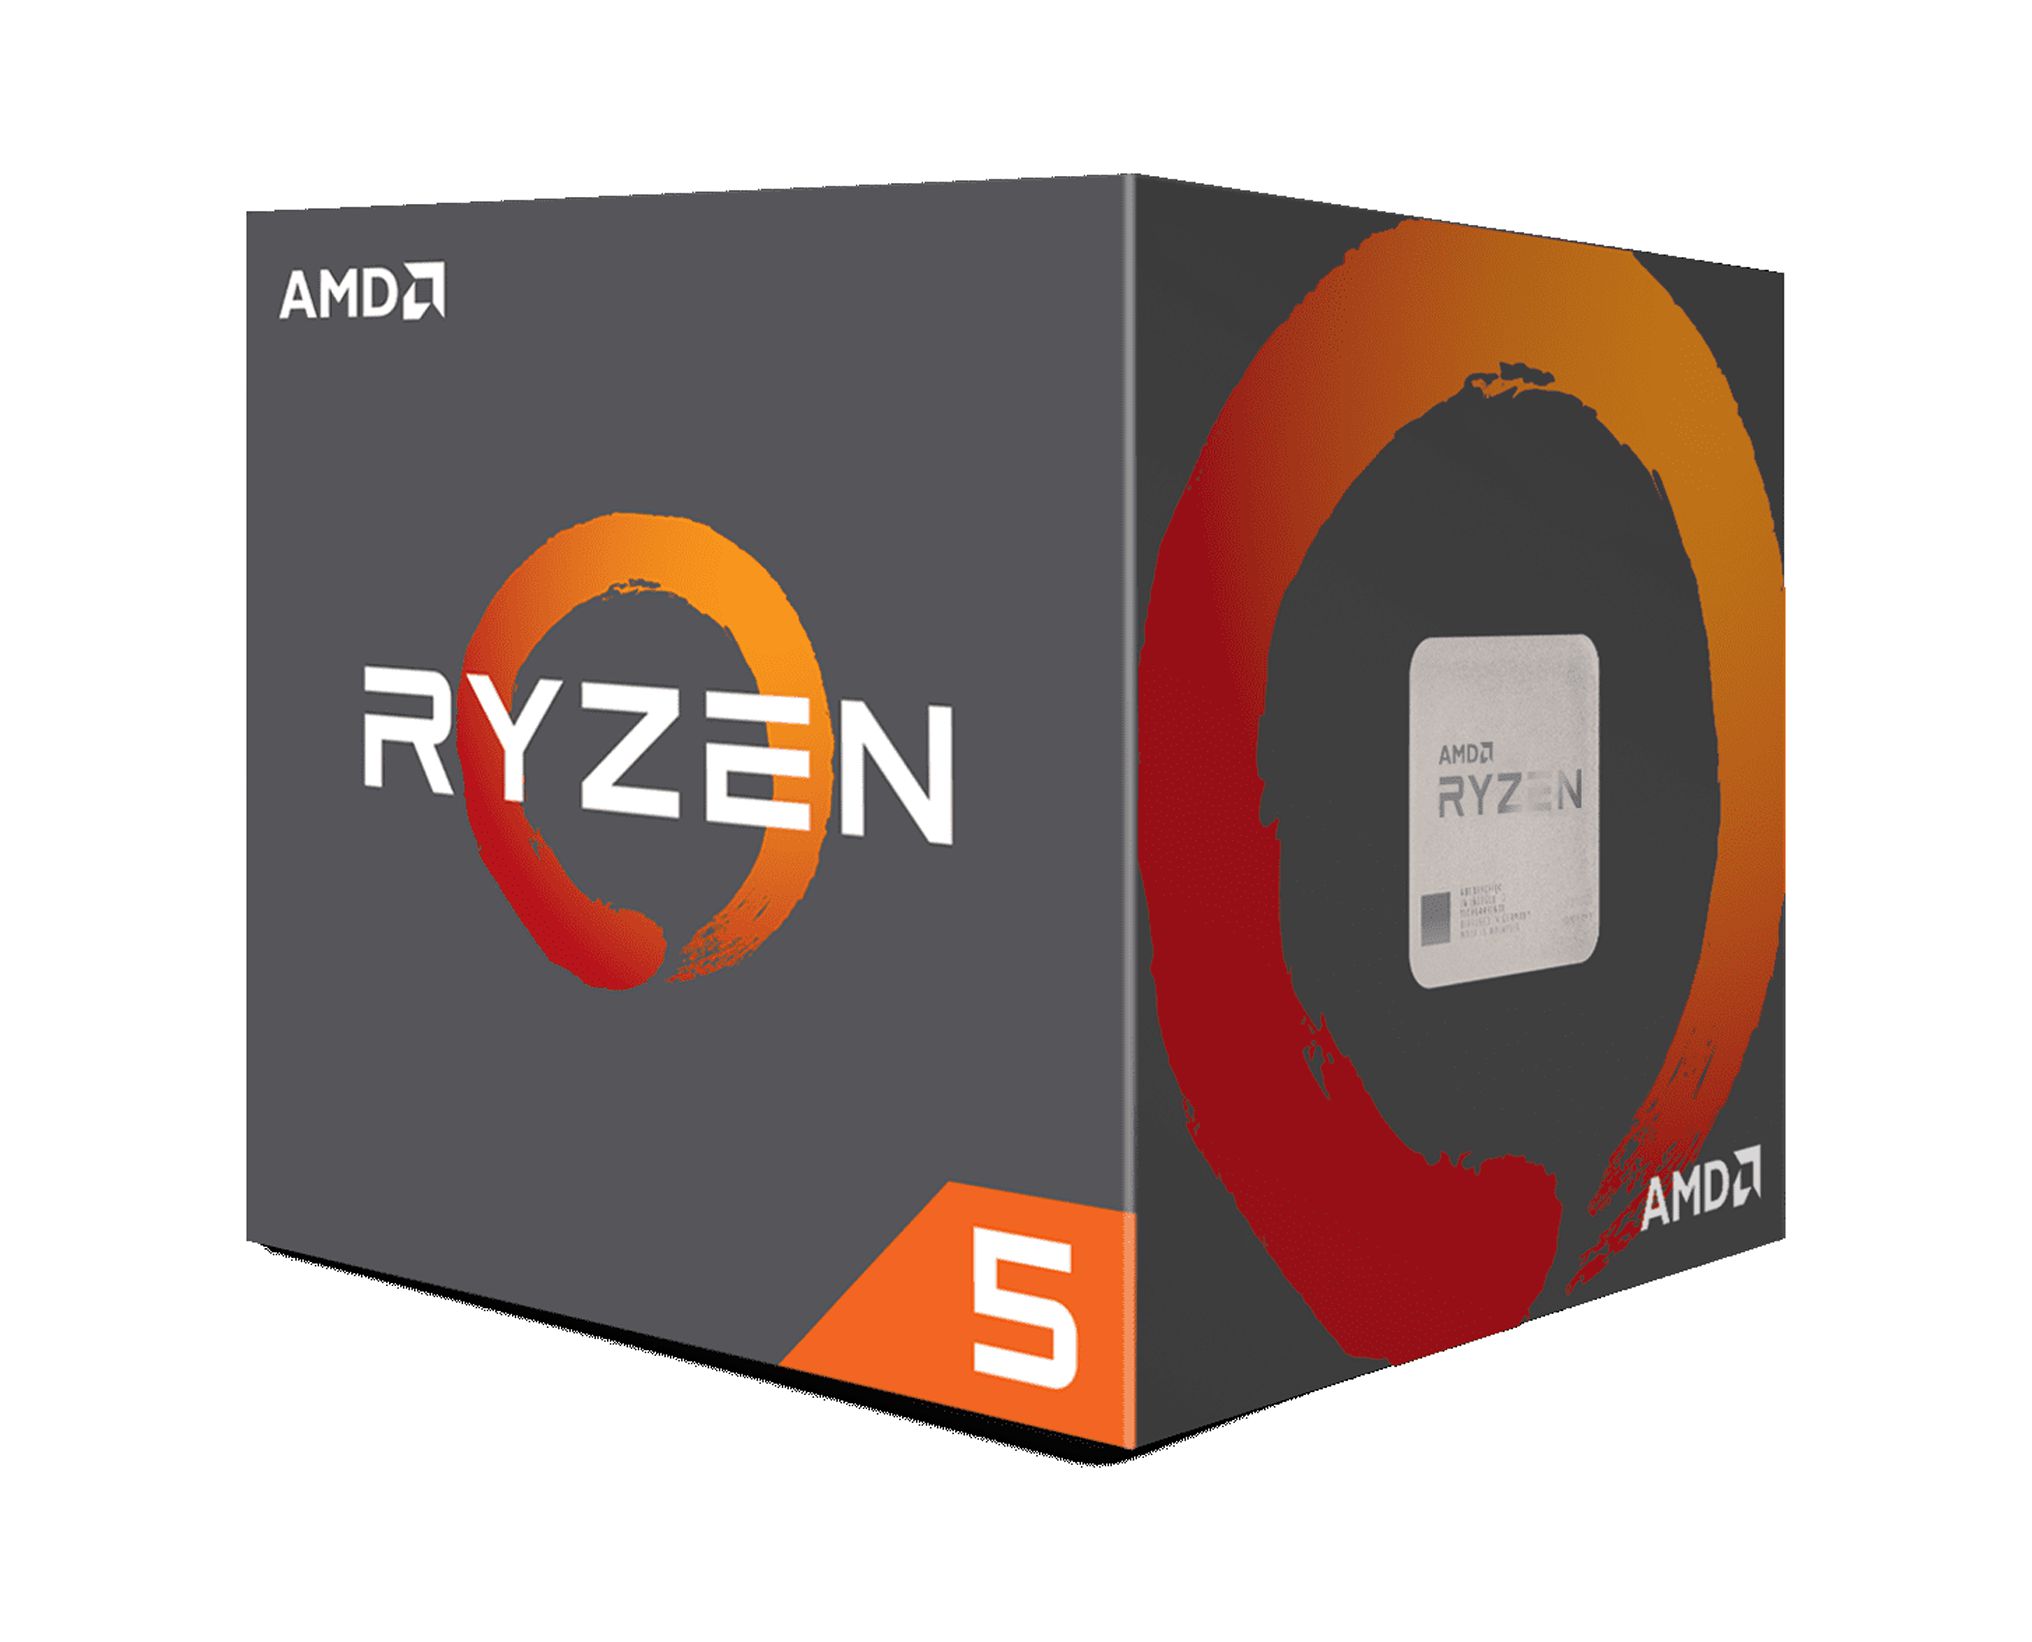 AMD RYZEN 5 1500X 3.5 GHz (3.7 GHz Turbo) 4-Core Socket AM4 16MB Cache Desktop Processor - YD150XBBAEBOX - image 1 of 2